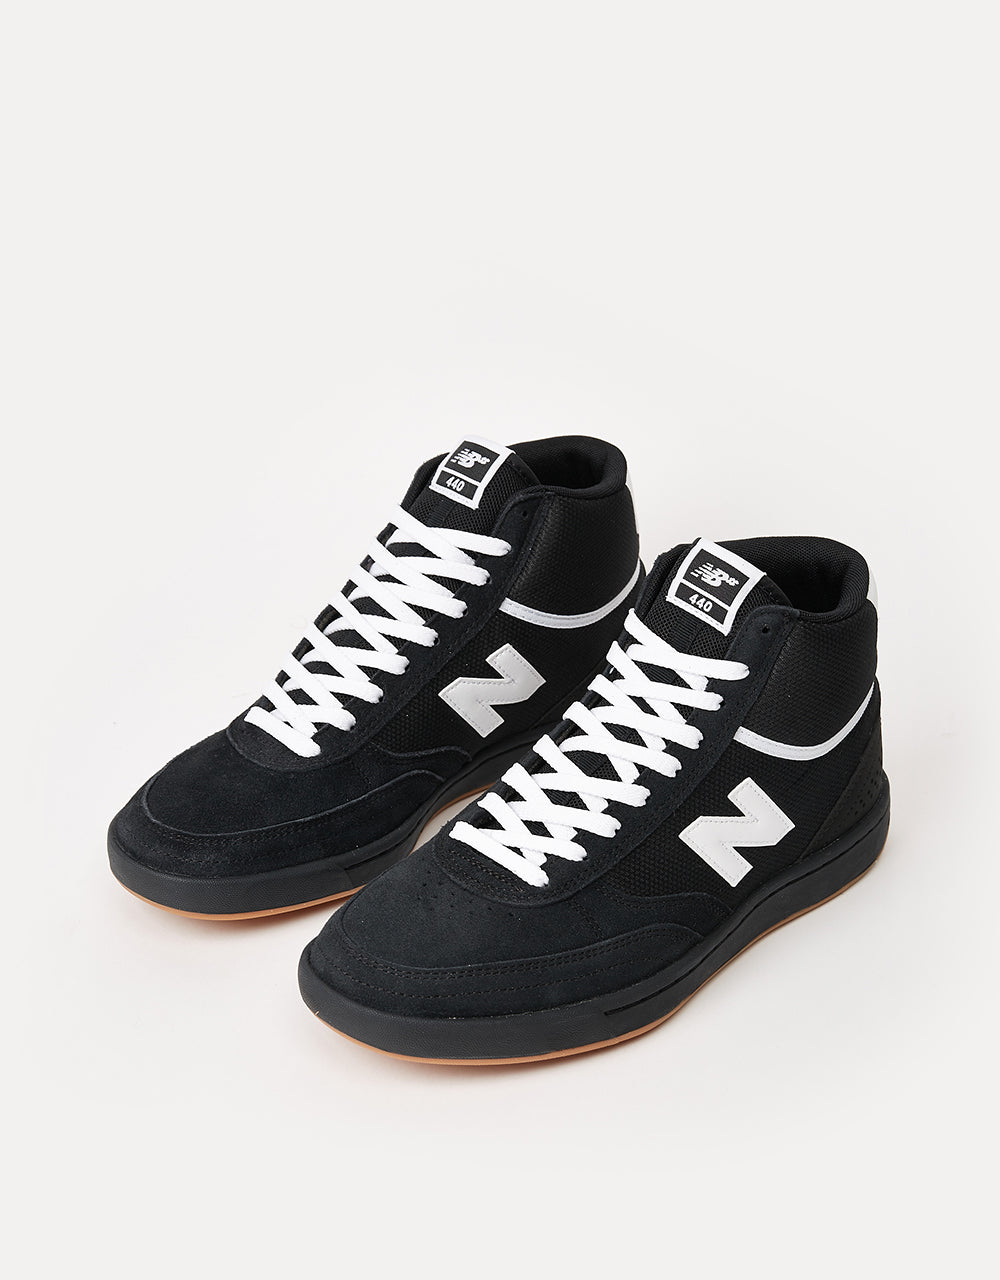 New Balance Numeric 440 Hi Skate Shoes - Black/White